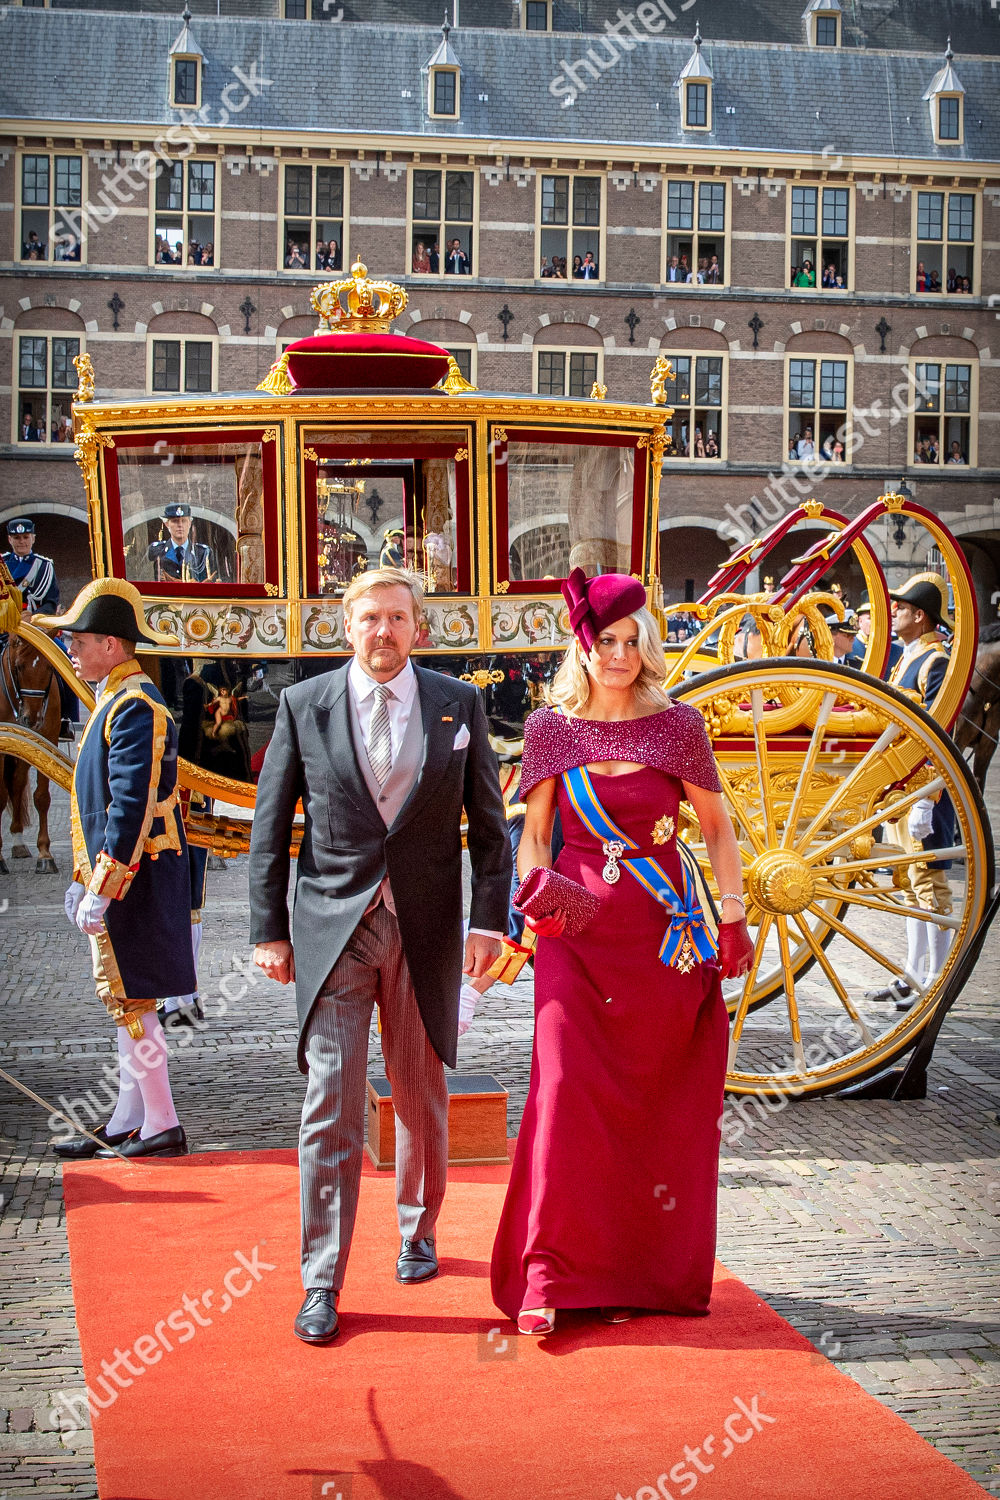 prinsjesdag-celebrations-the-hague-netherlands-shutterstock-editorial-10416188au.jpg